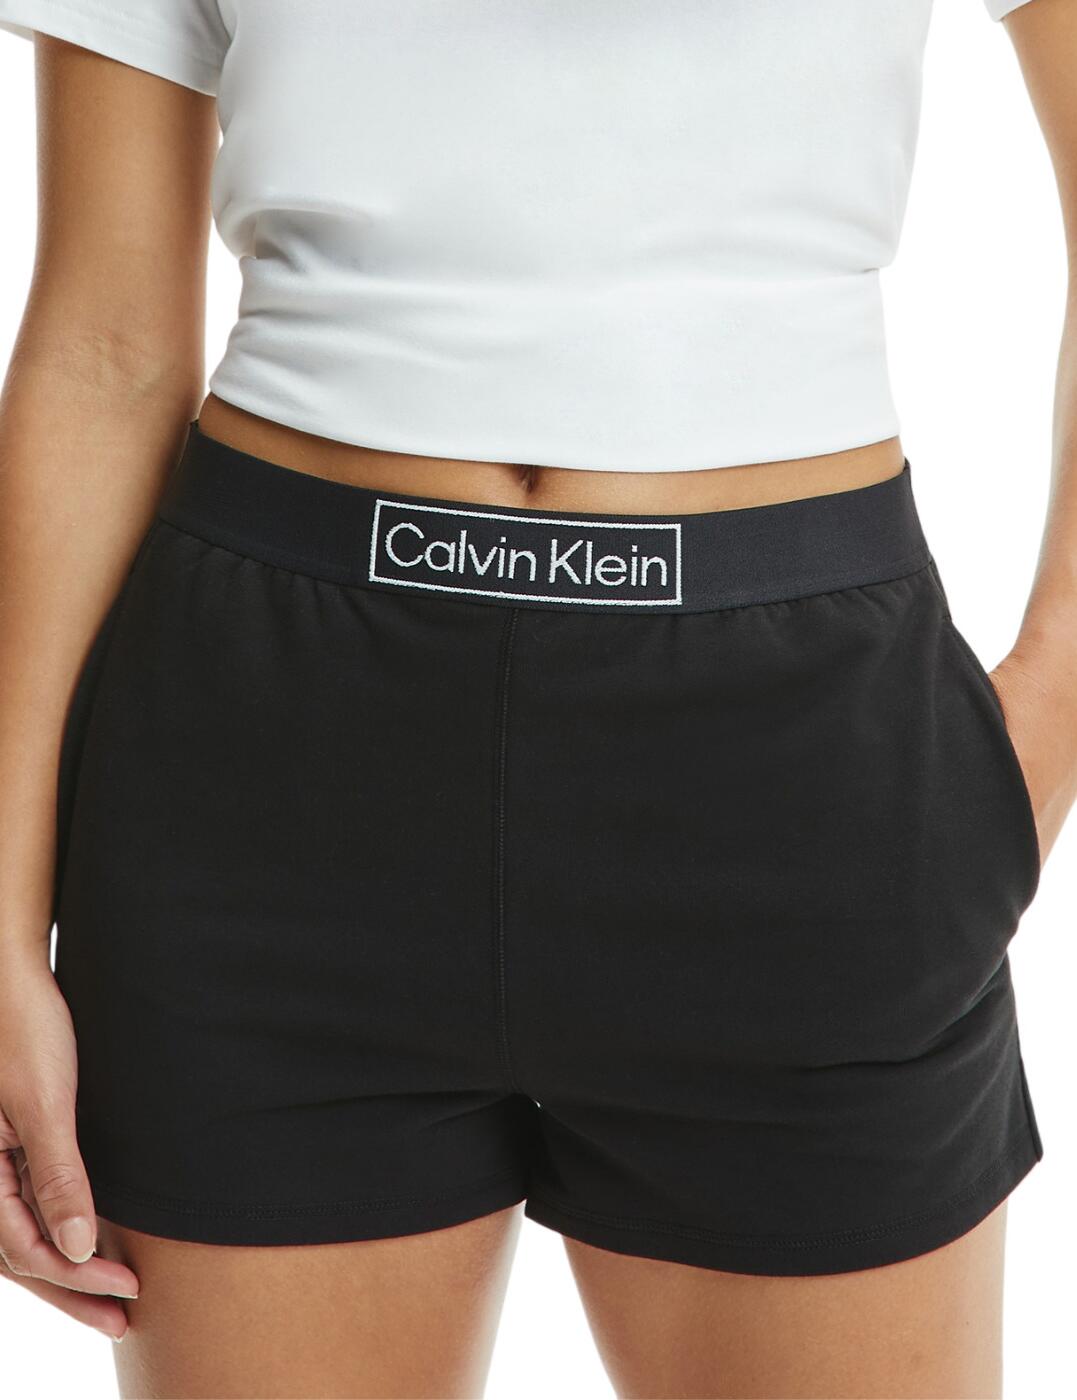 Calvin Klein Women's Reimagined Heritage Sleep Shorts